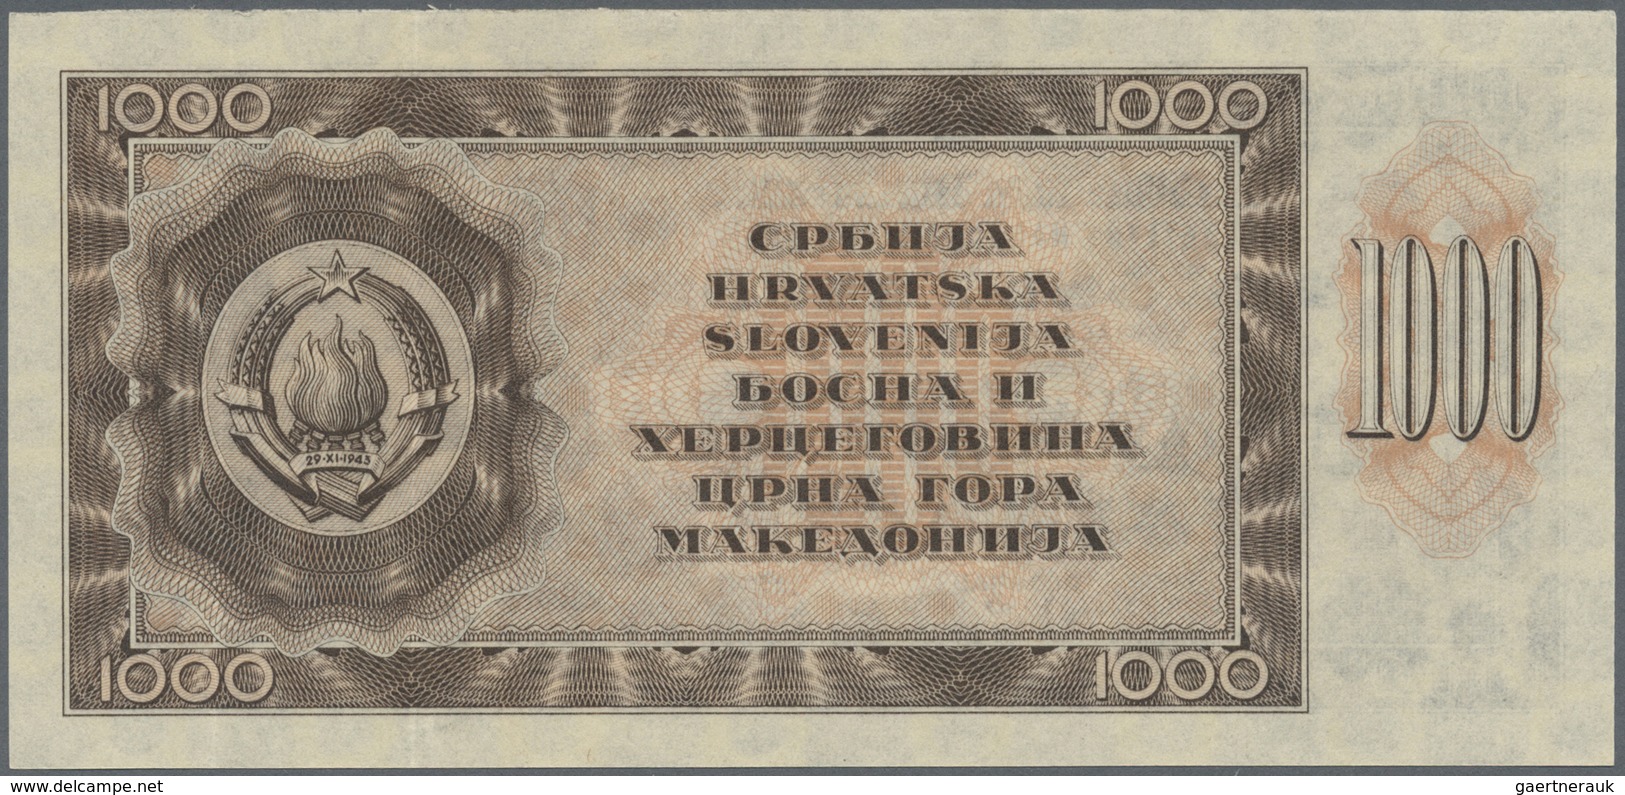 Yugoslavia / Jugoslavien: 1000 Dinara 1950, P.67x (not Issued), Minor Creases In The Paper, Tiny Cut - Jugoslavia